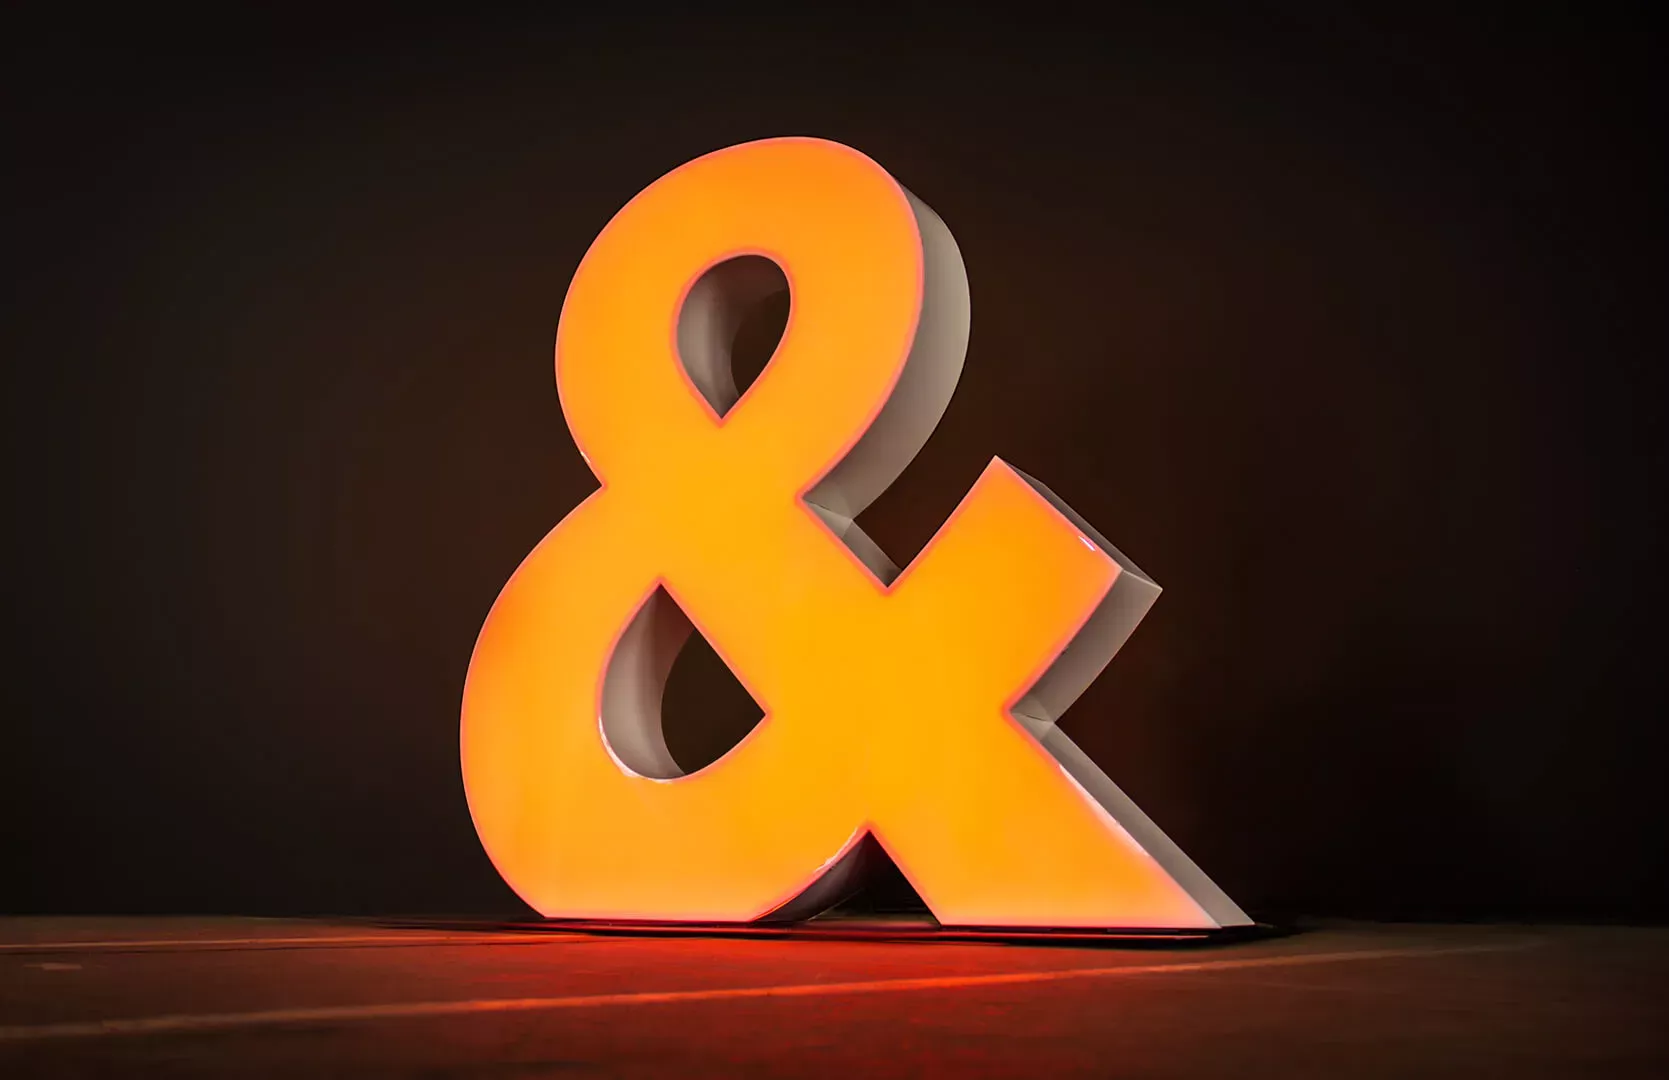 Cartas de gran formato - Símbolo gigante iluminado en naranja